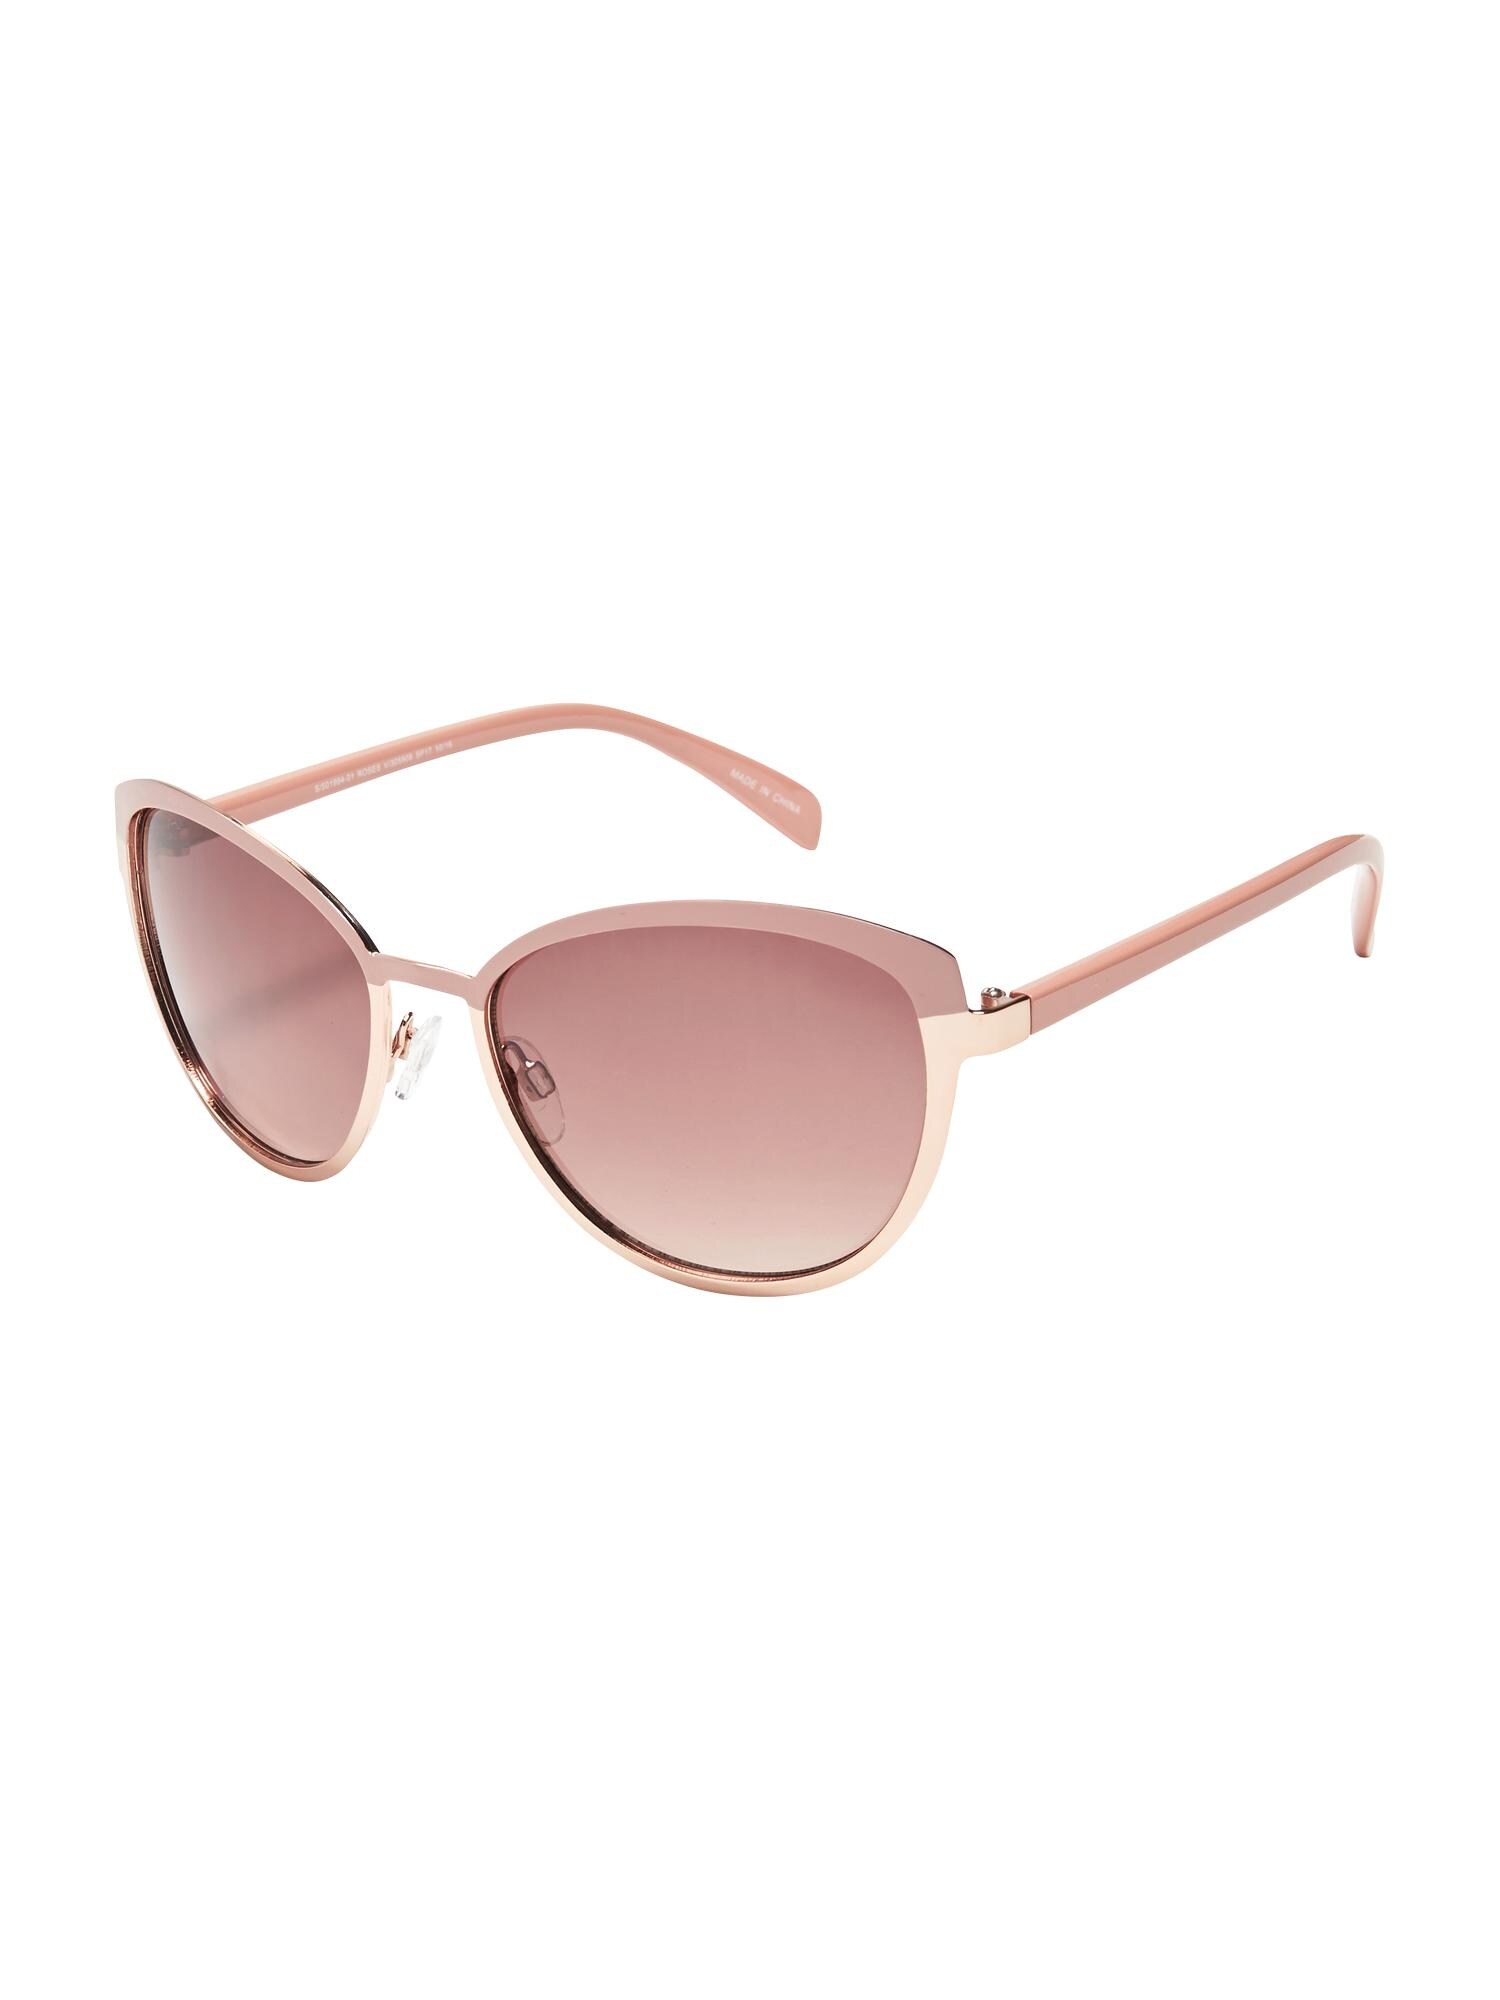 Foster Grant Women's Aviator Rose Gold Sunglasses - Walmart.com